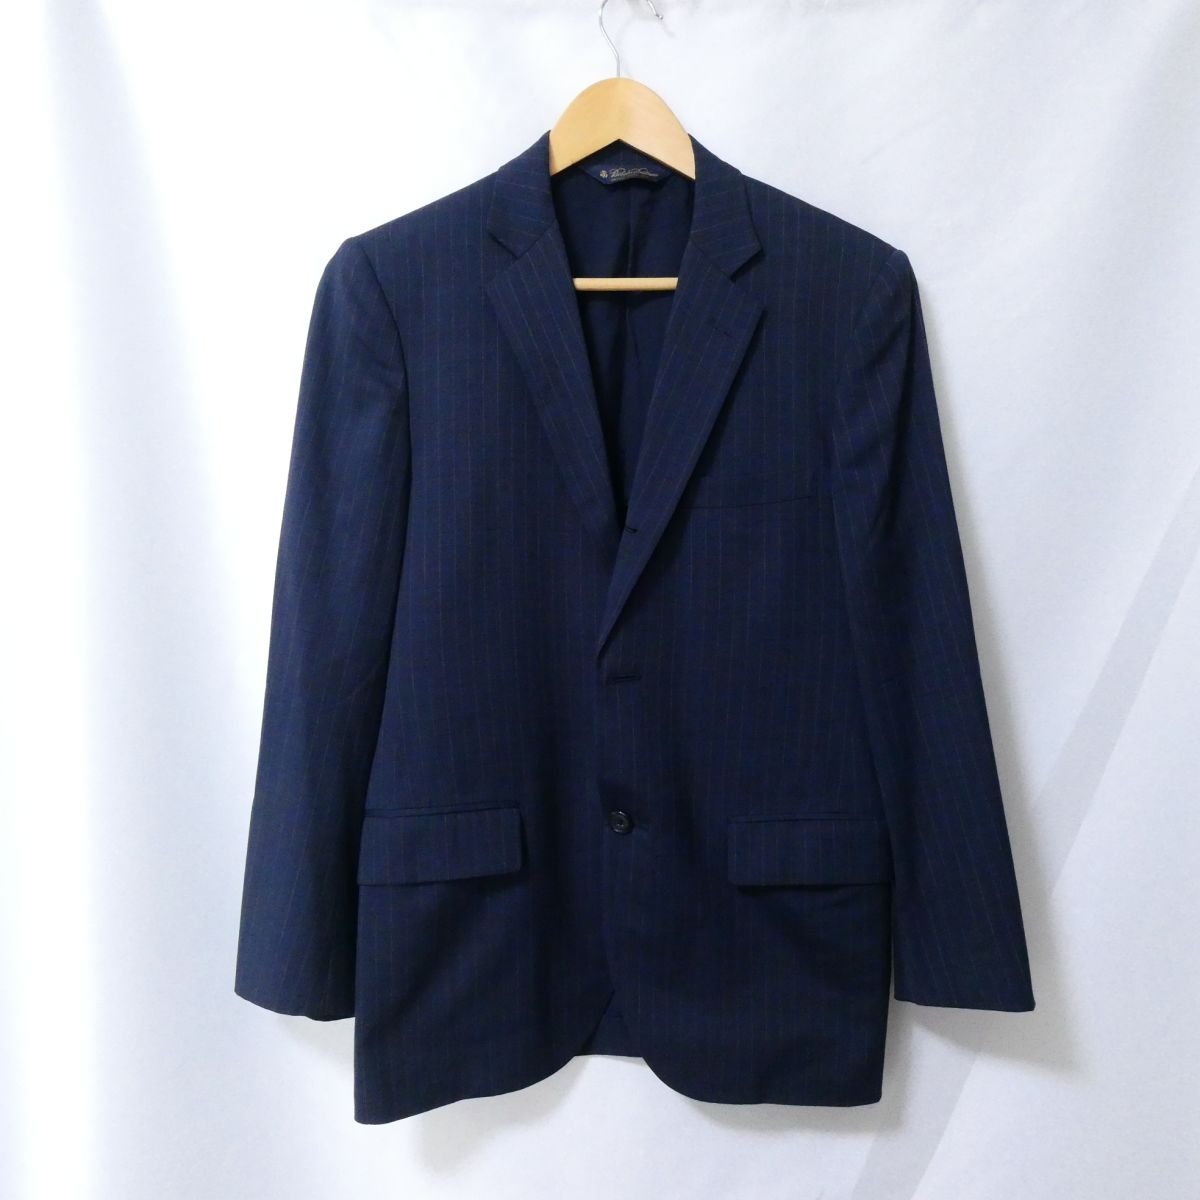  хорошая вещь BROOKS BROTHERS Brooks Brothers полоса рисунок 2B tailored jacket брюки выставить костюм 37SHT W31 темно-синий 205